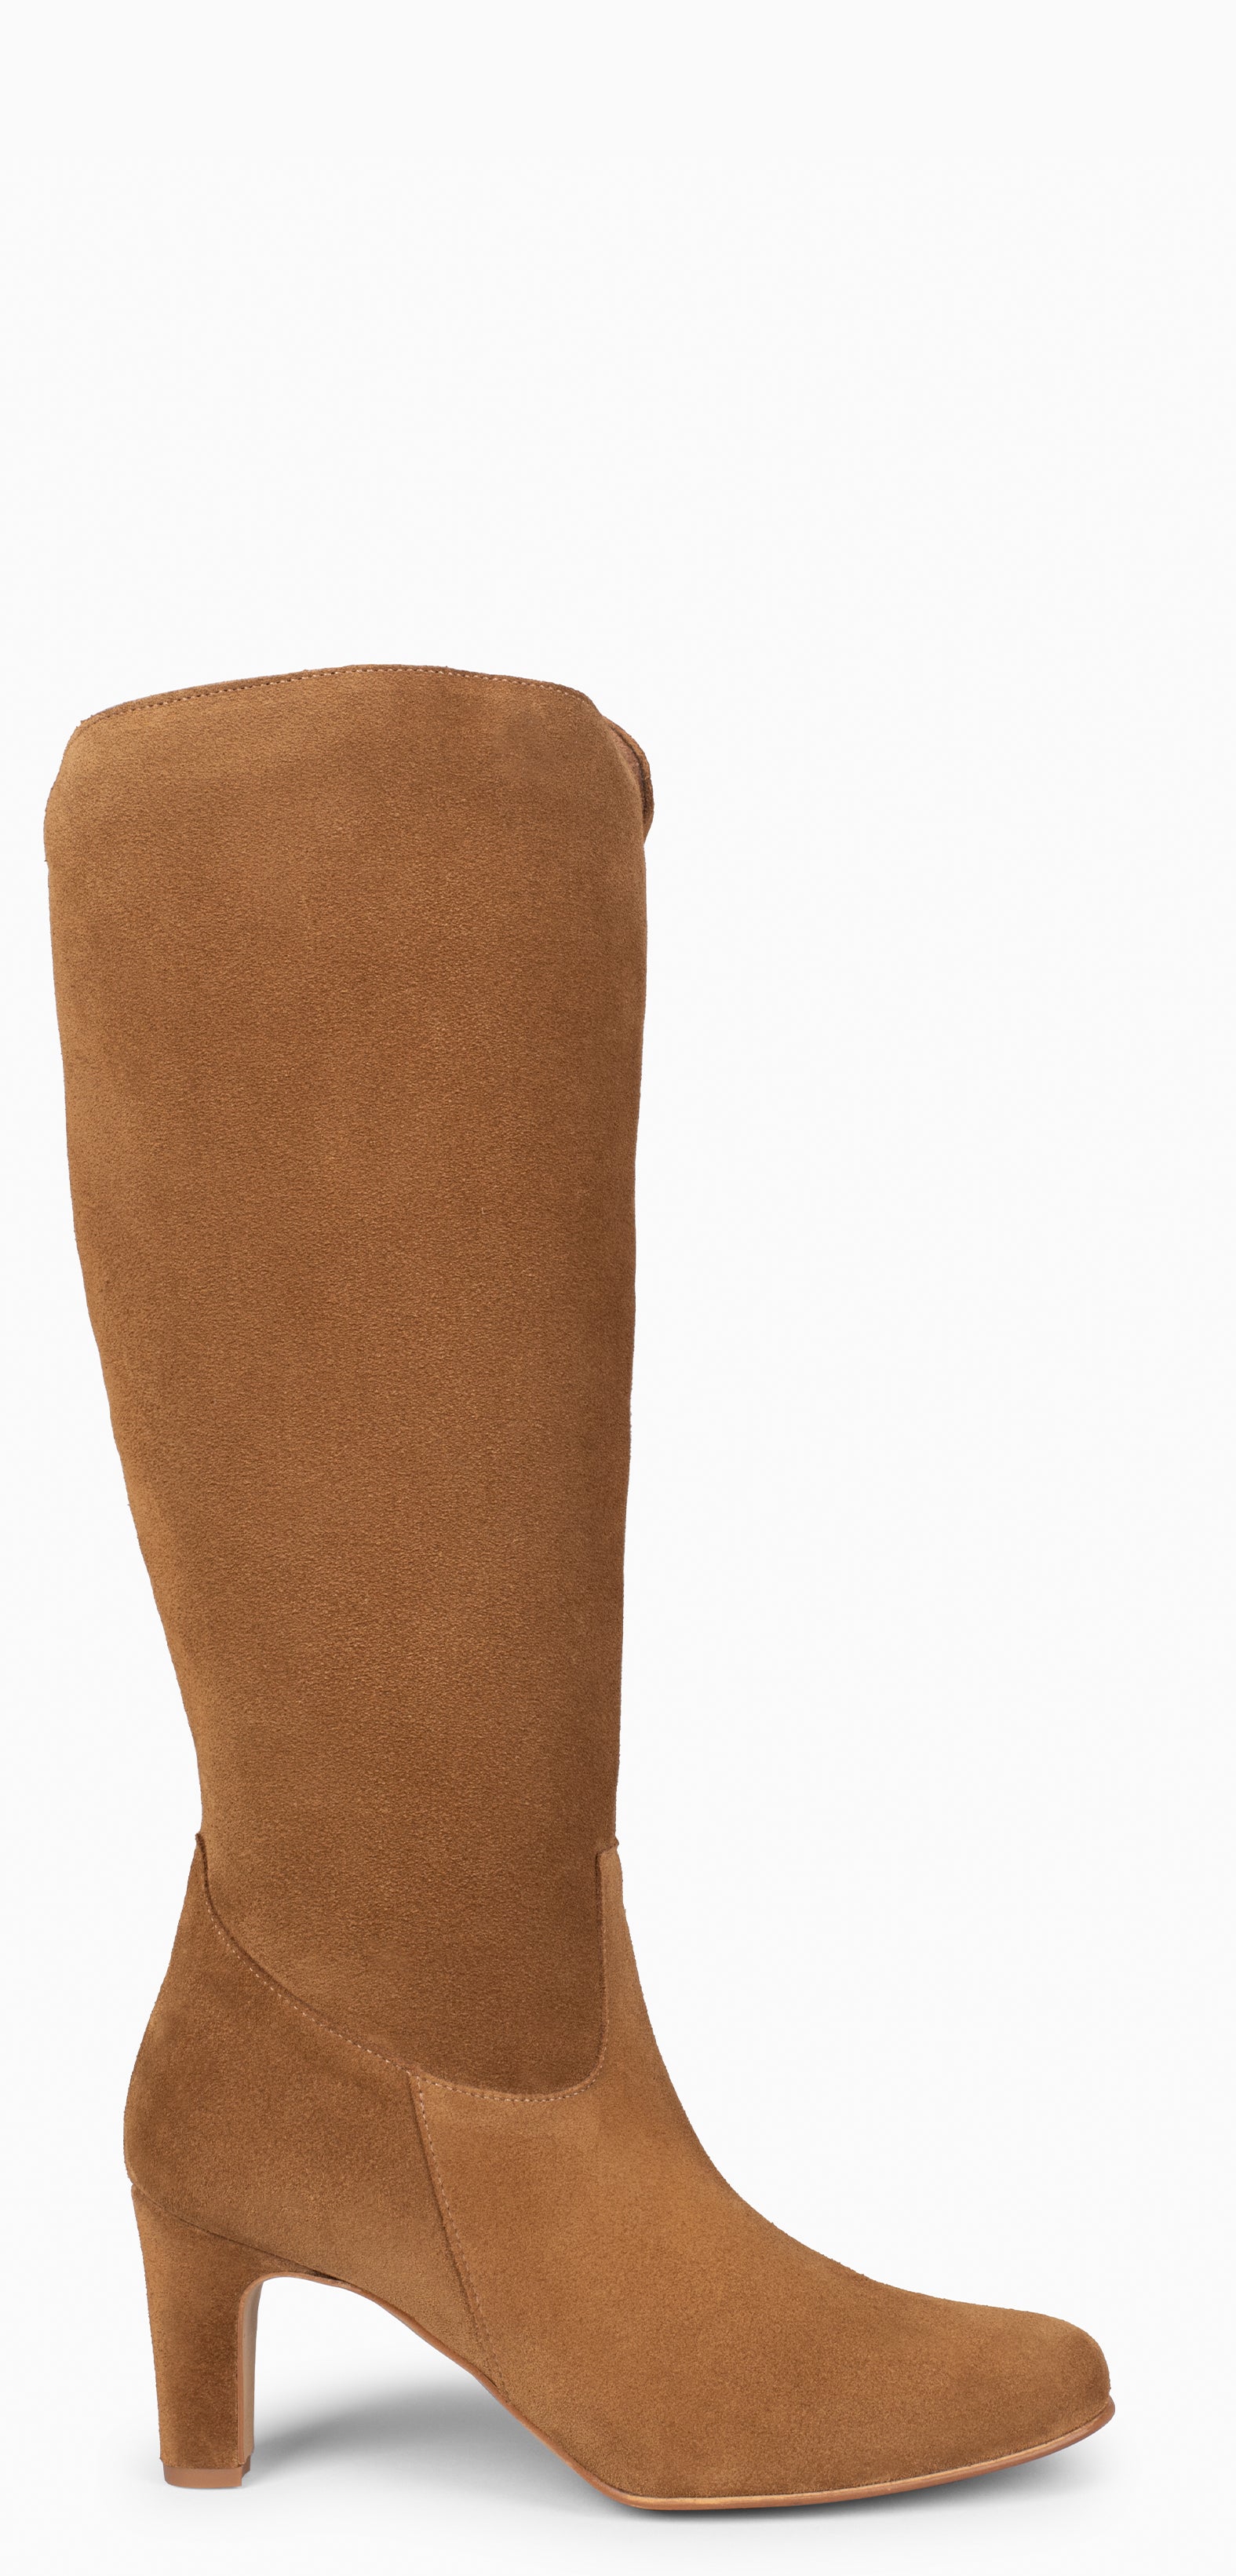 FRELARD – BROWN Women Boots with round toe 